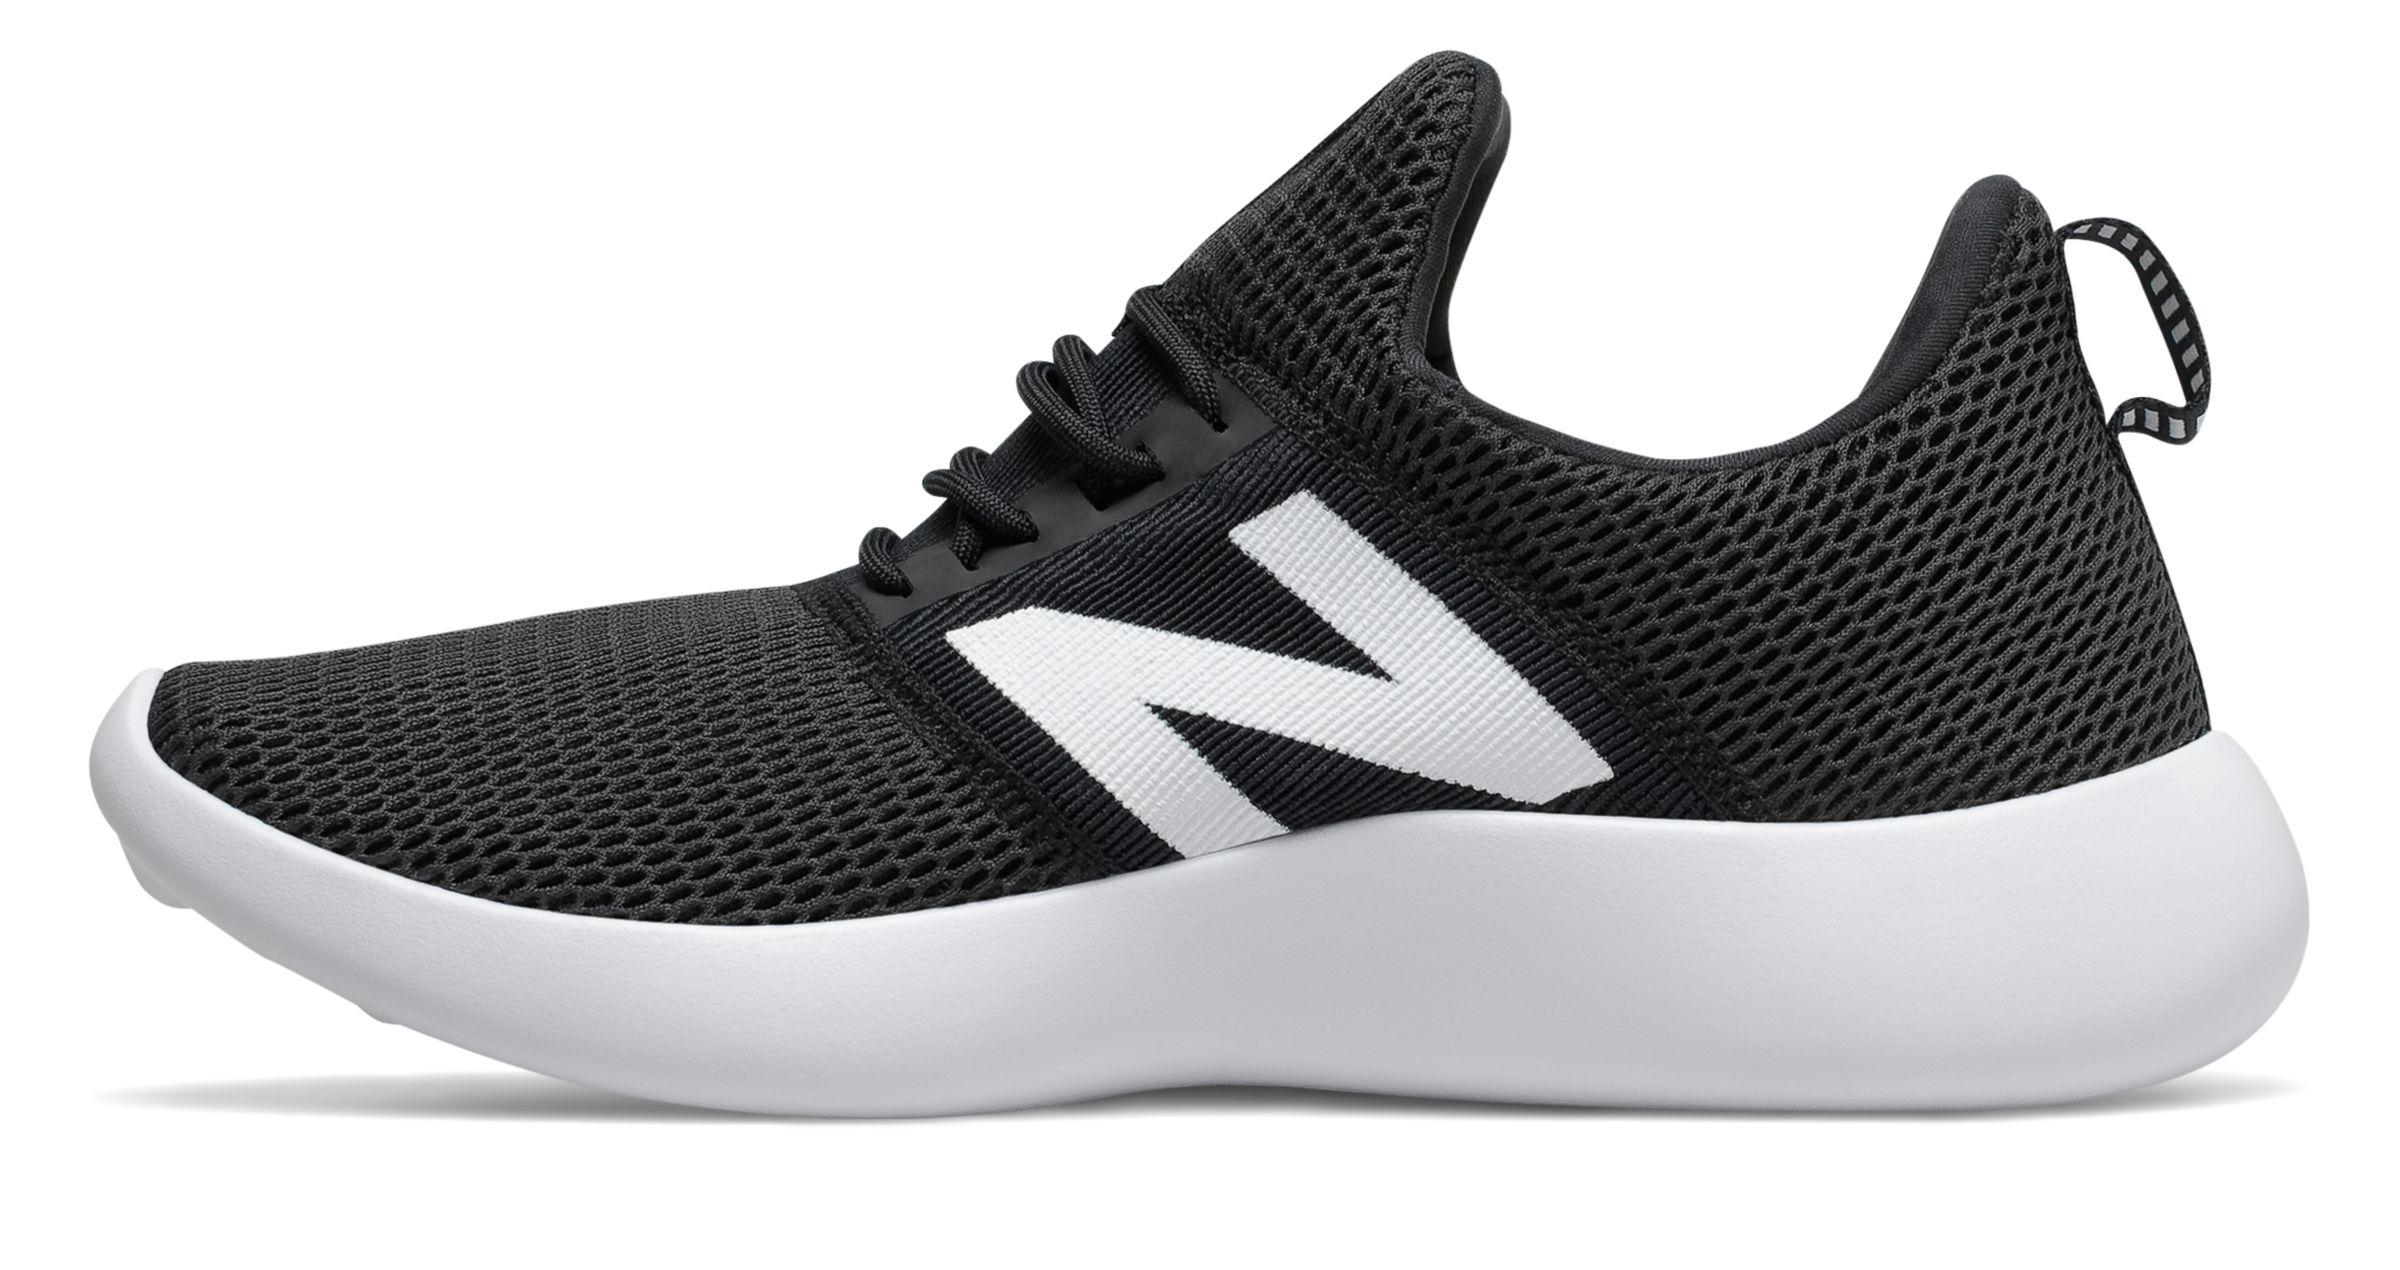 New Balance Rcvry V2 Pre/postgame Shoes in Black/White